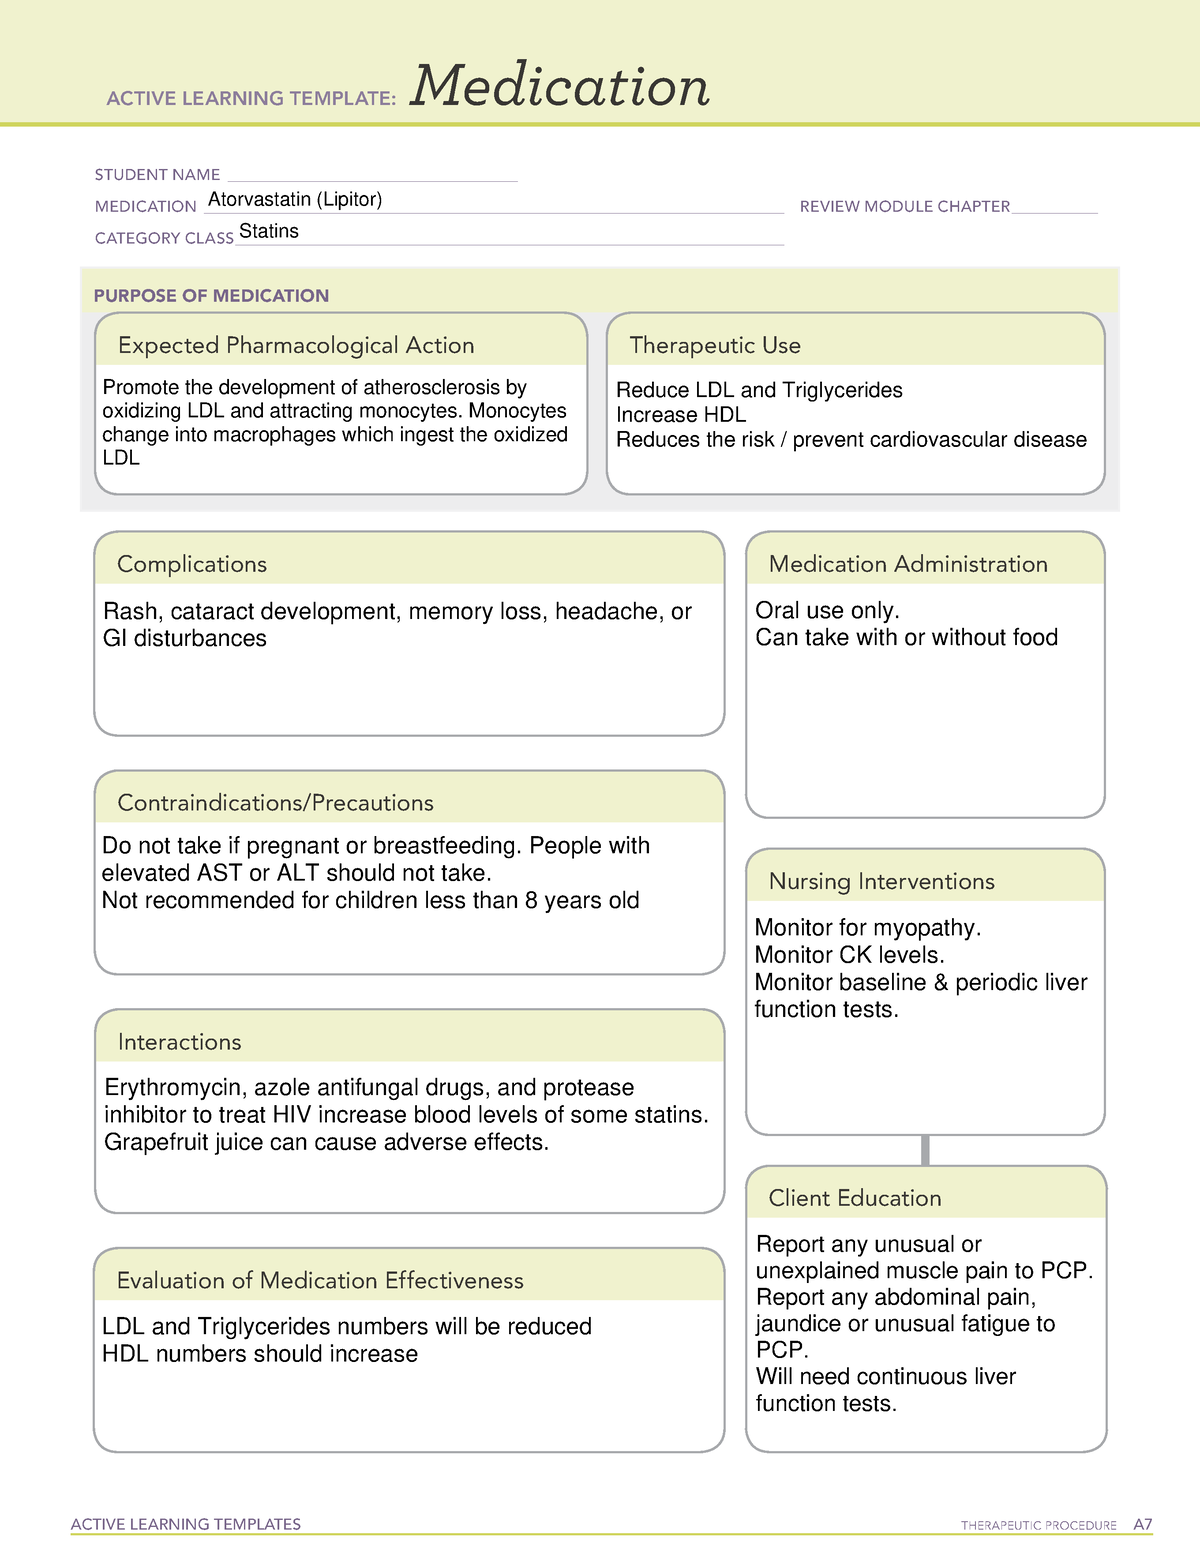 ATI Atrovastatin (Lipitor) Med Sheet ACTIVE LEARNING TEMPLATES